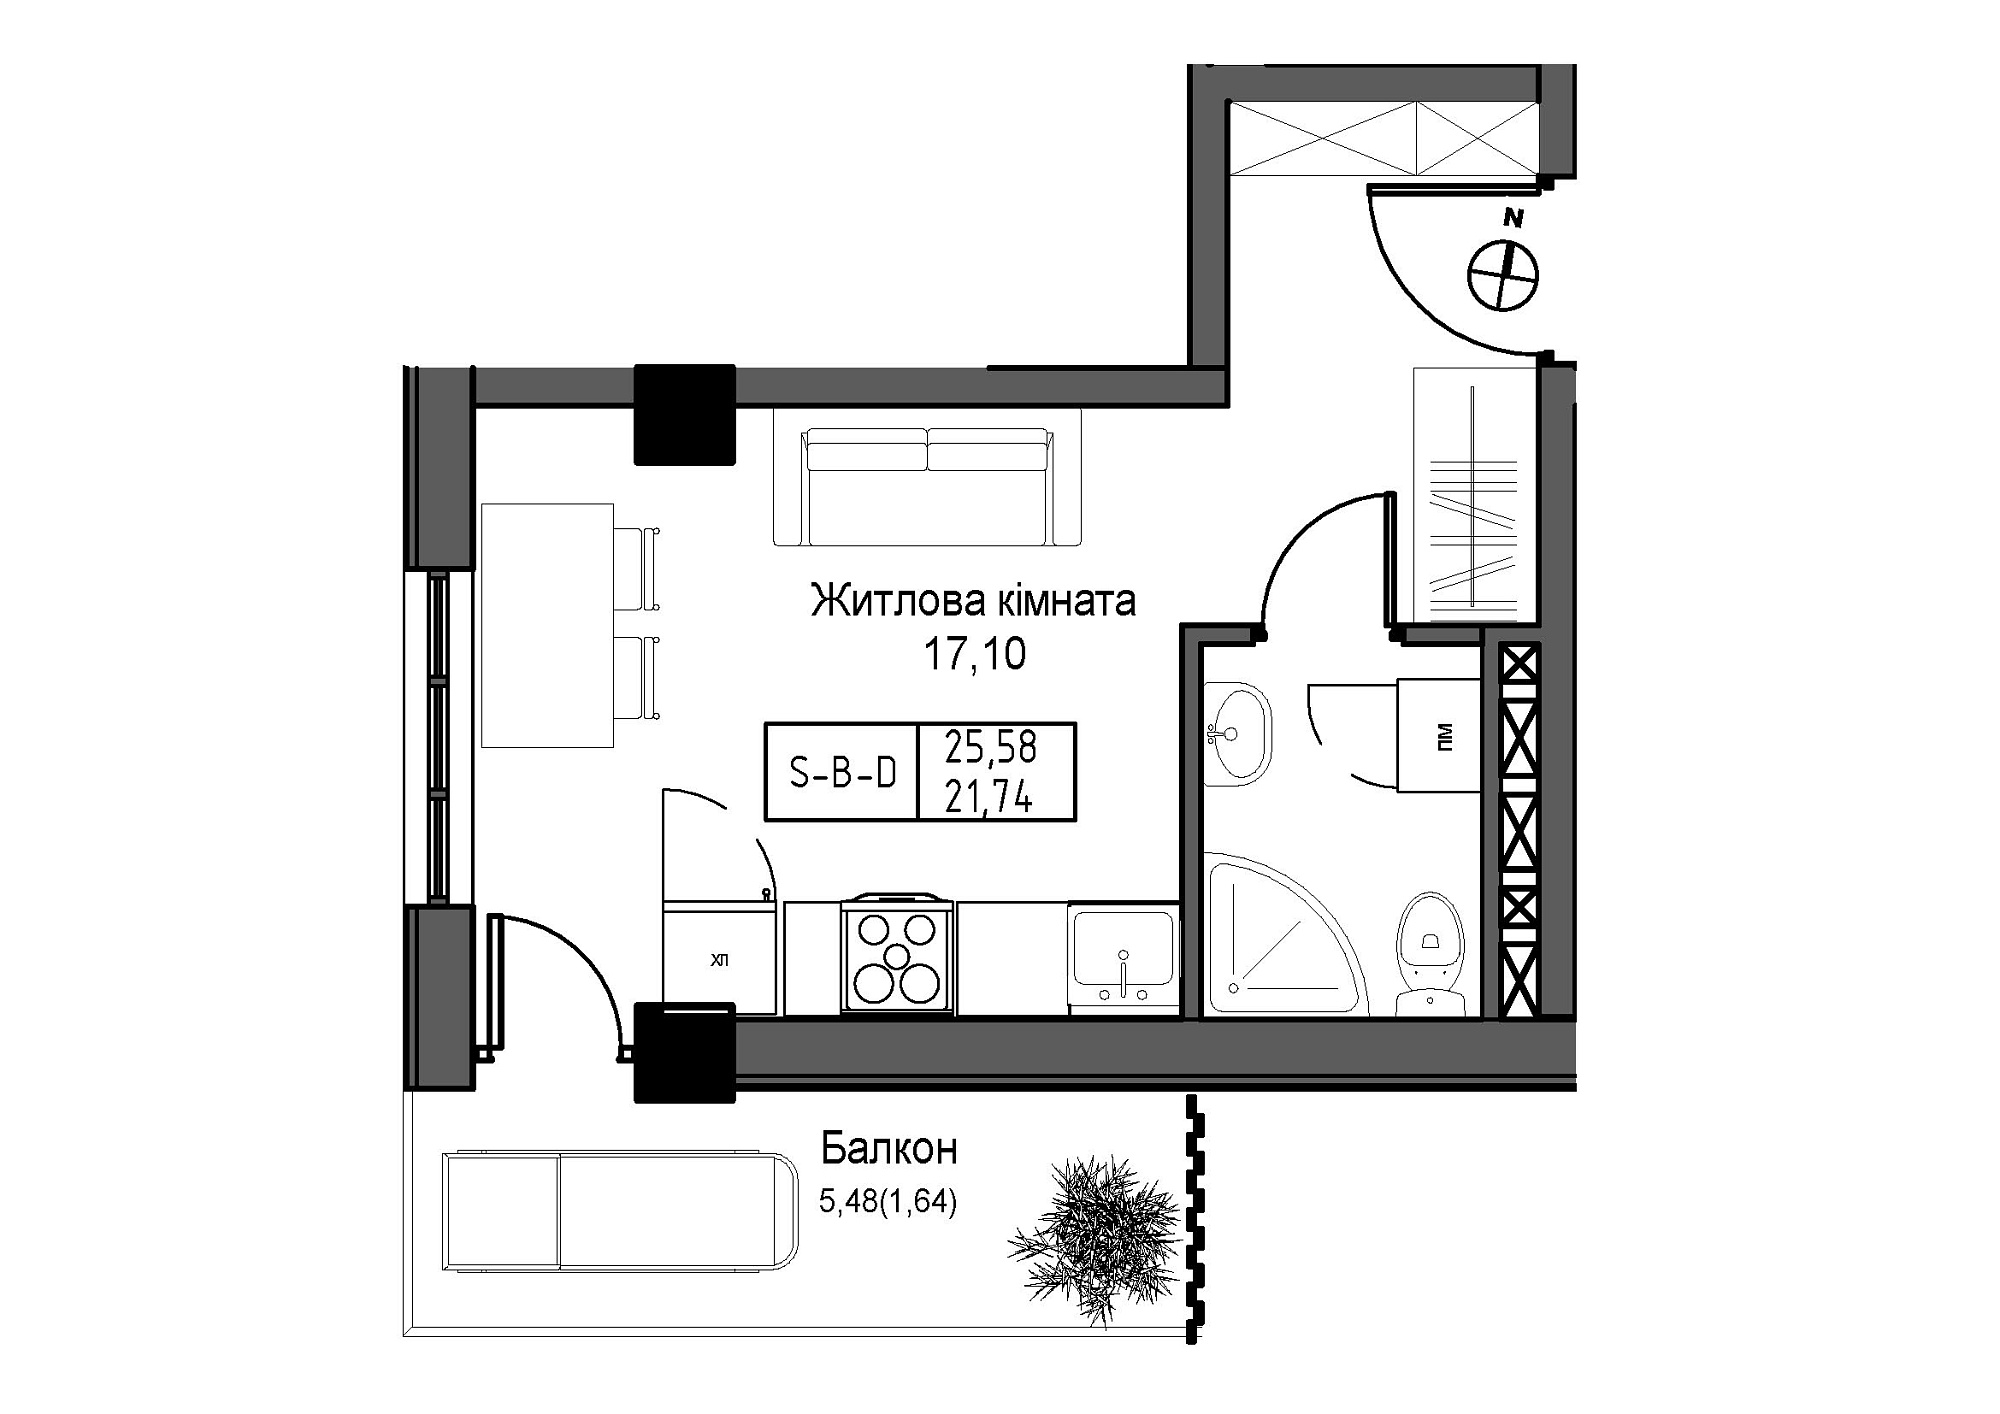 Планування Smart-квартира площею 21.74м2, UM-007-05/0010.